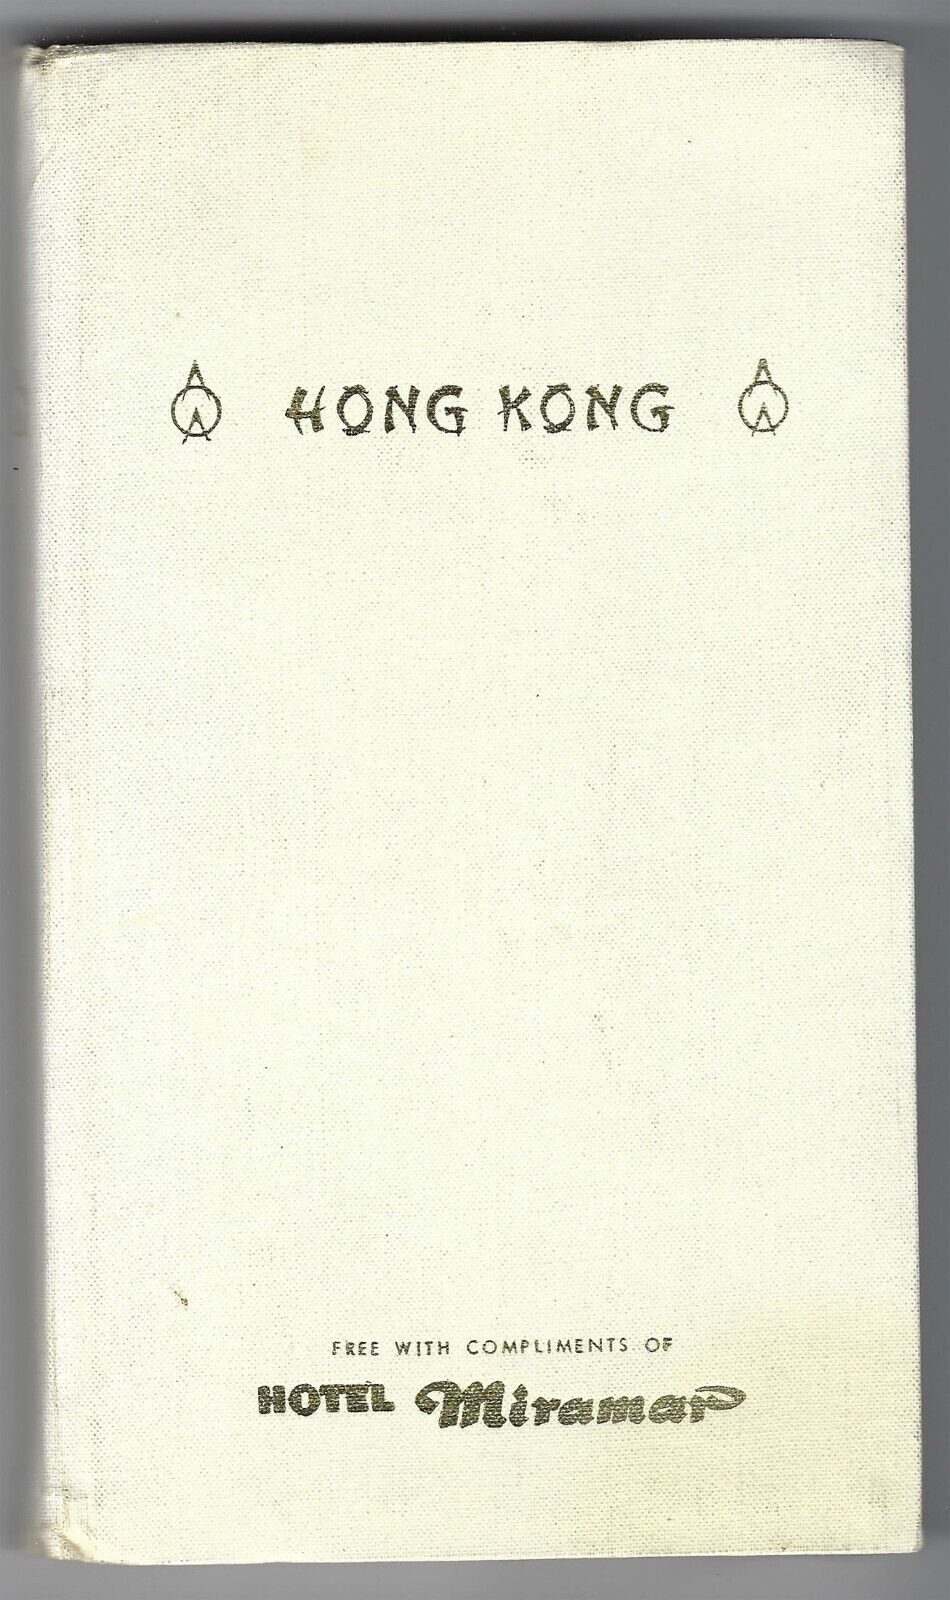 1970 Hong Kong A-O-A  Guide Book + Hotel Miramar For Tourists & Travelers